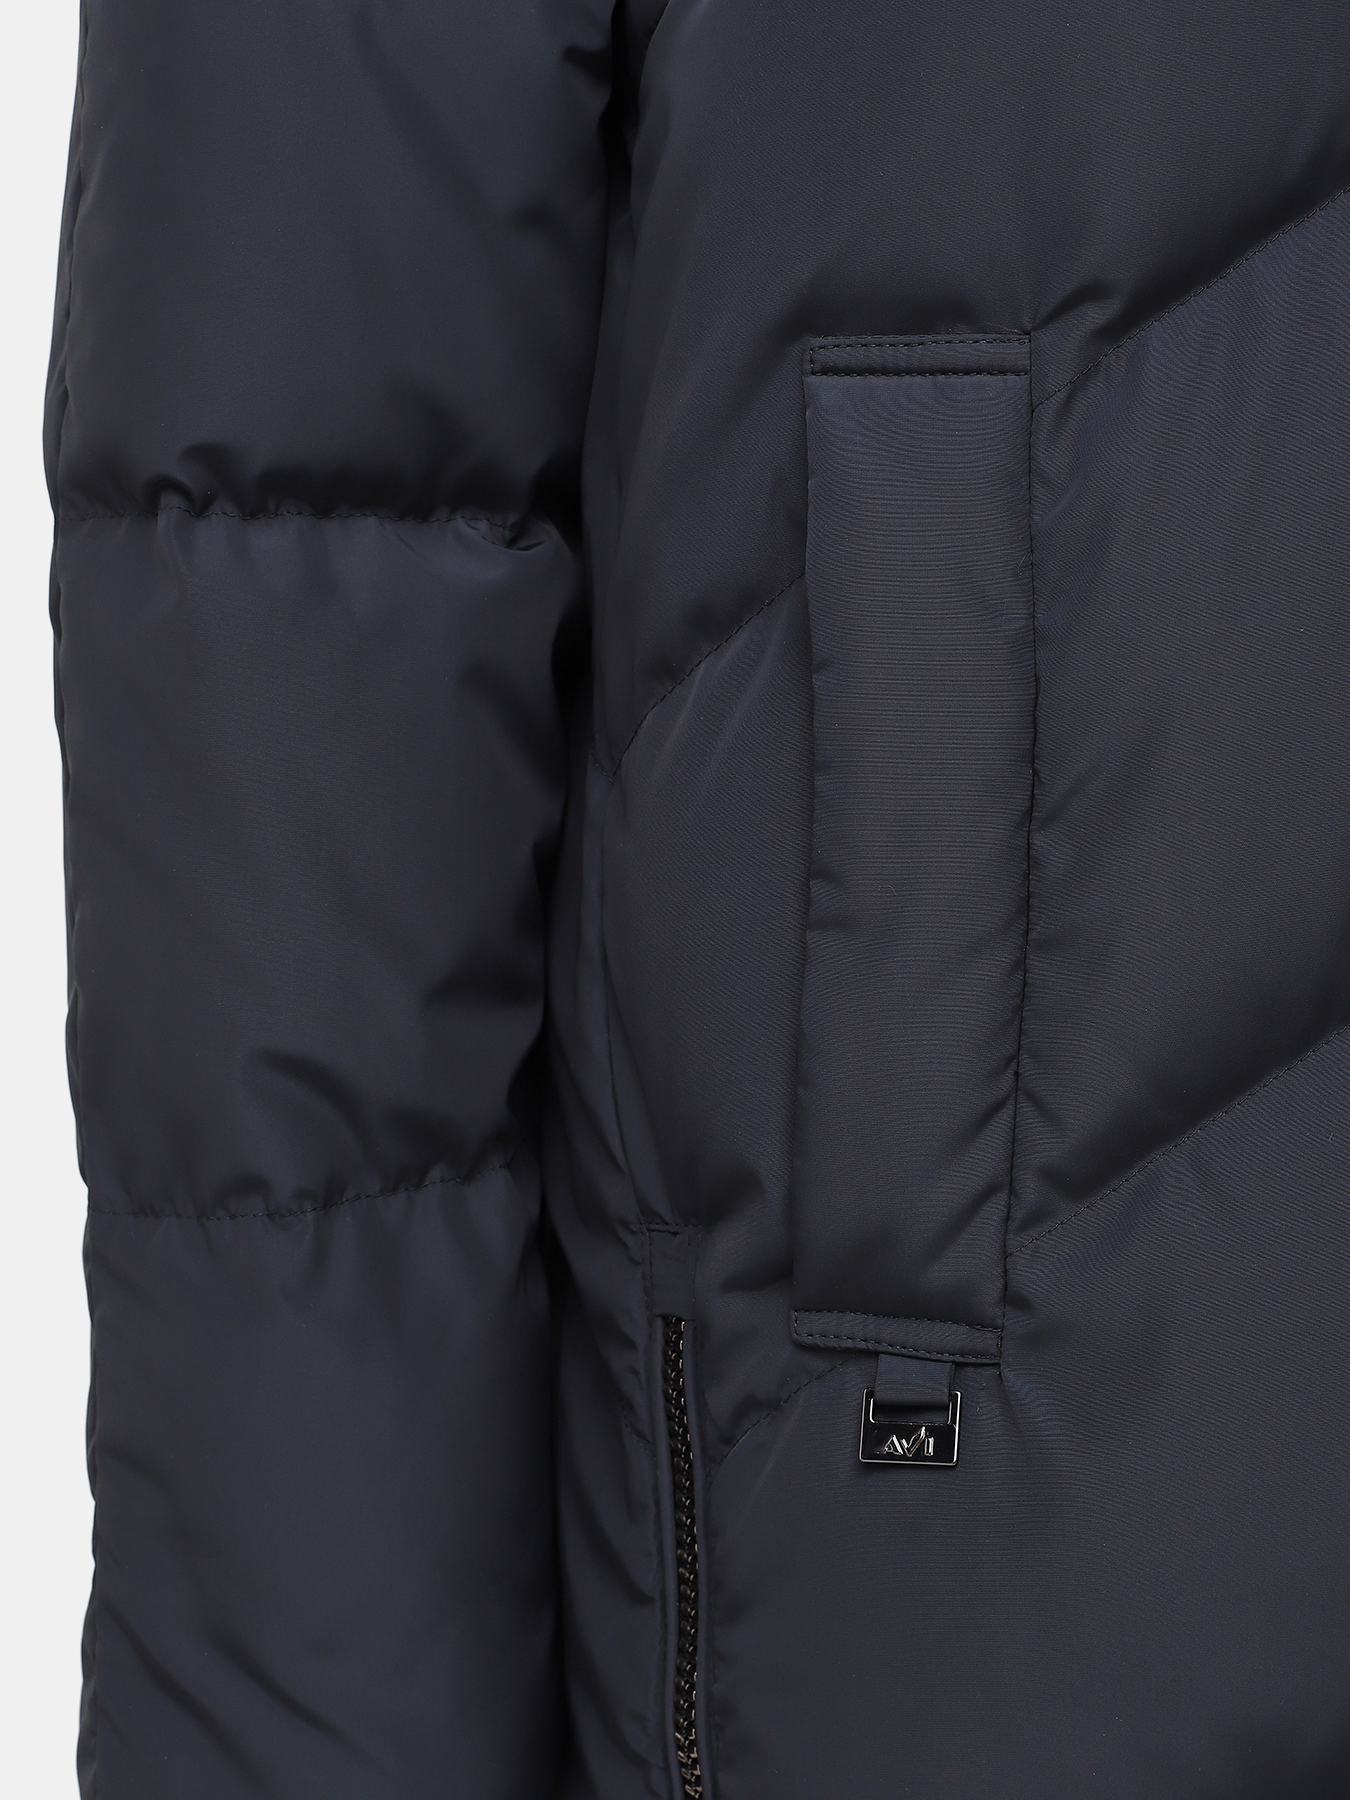 Пальто зимнее AVI 433610-018, цвет темно-синий, размер 36 - фото 2